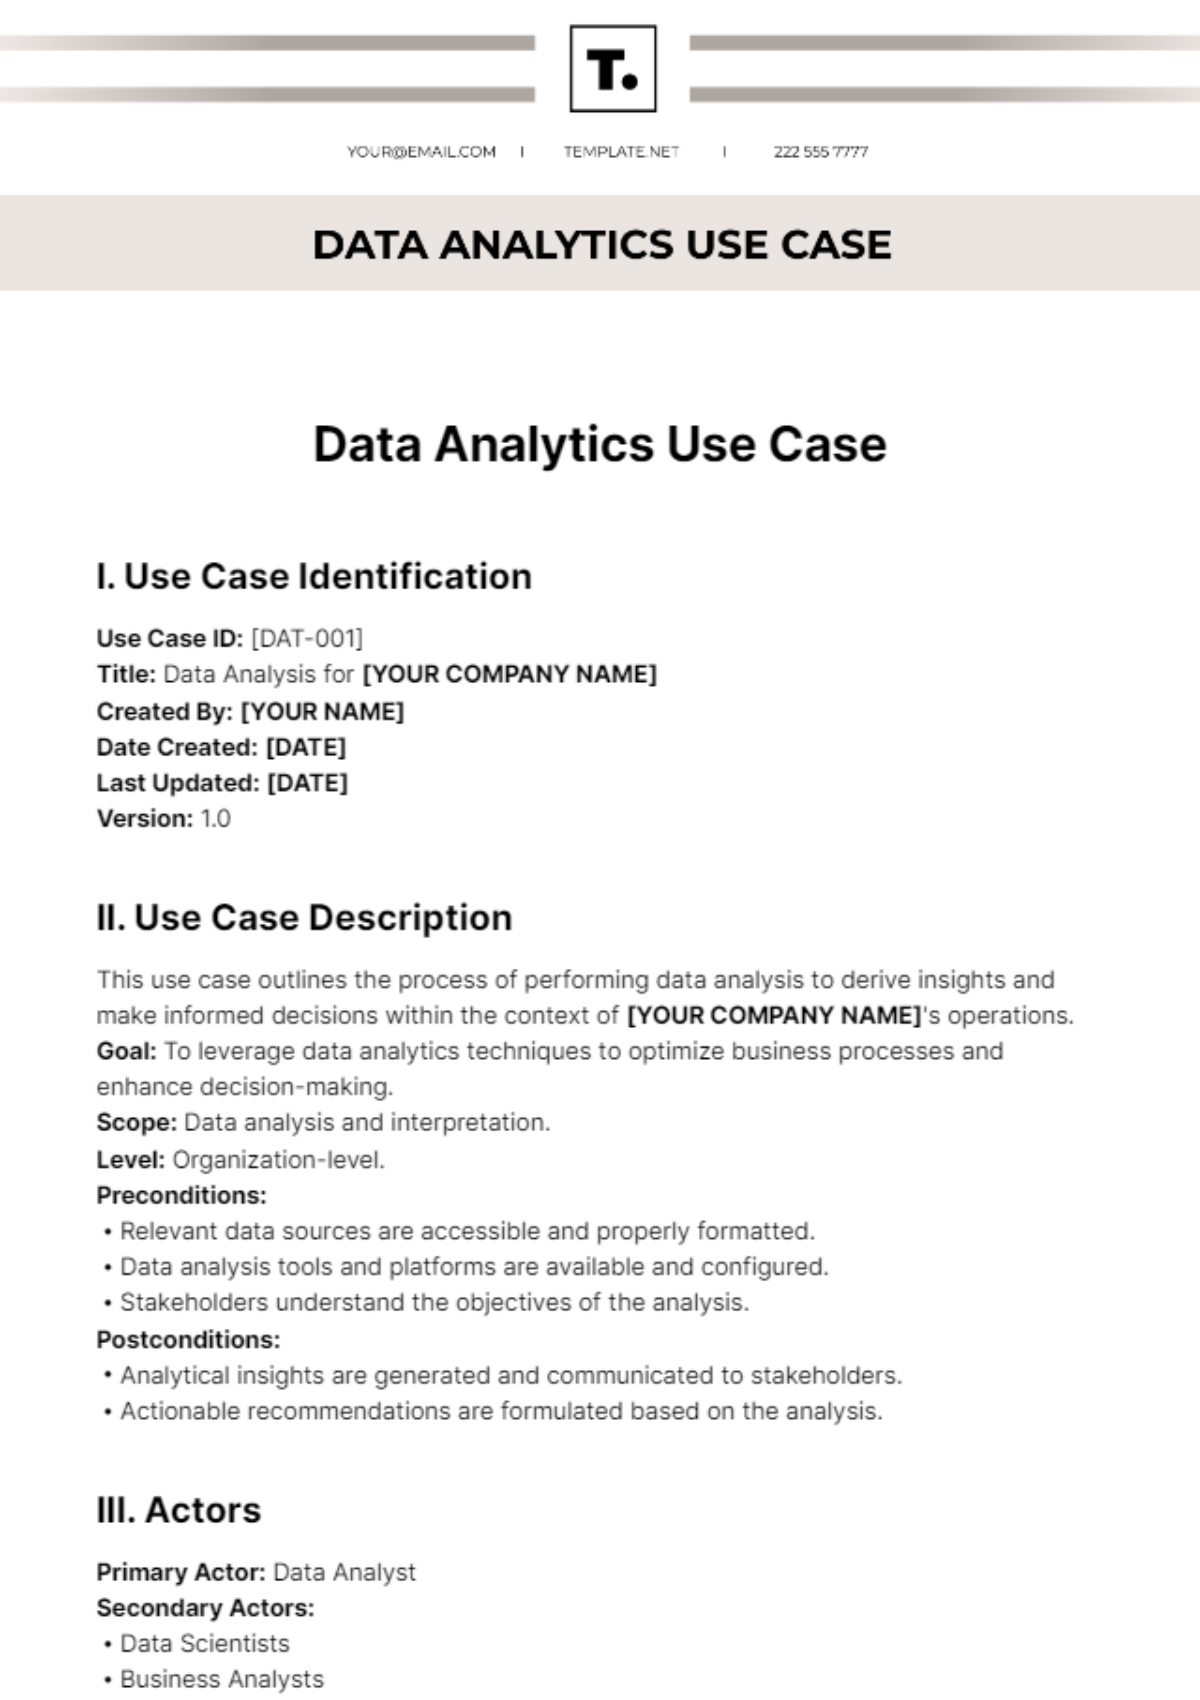 Data Analytics Use Case Template